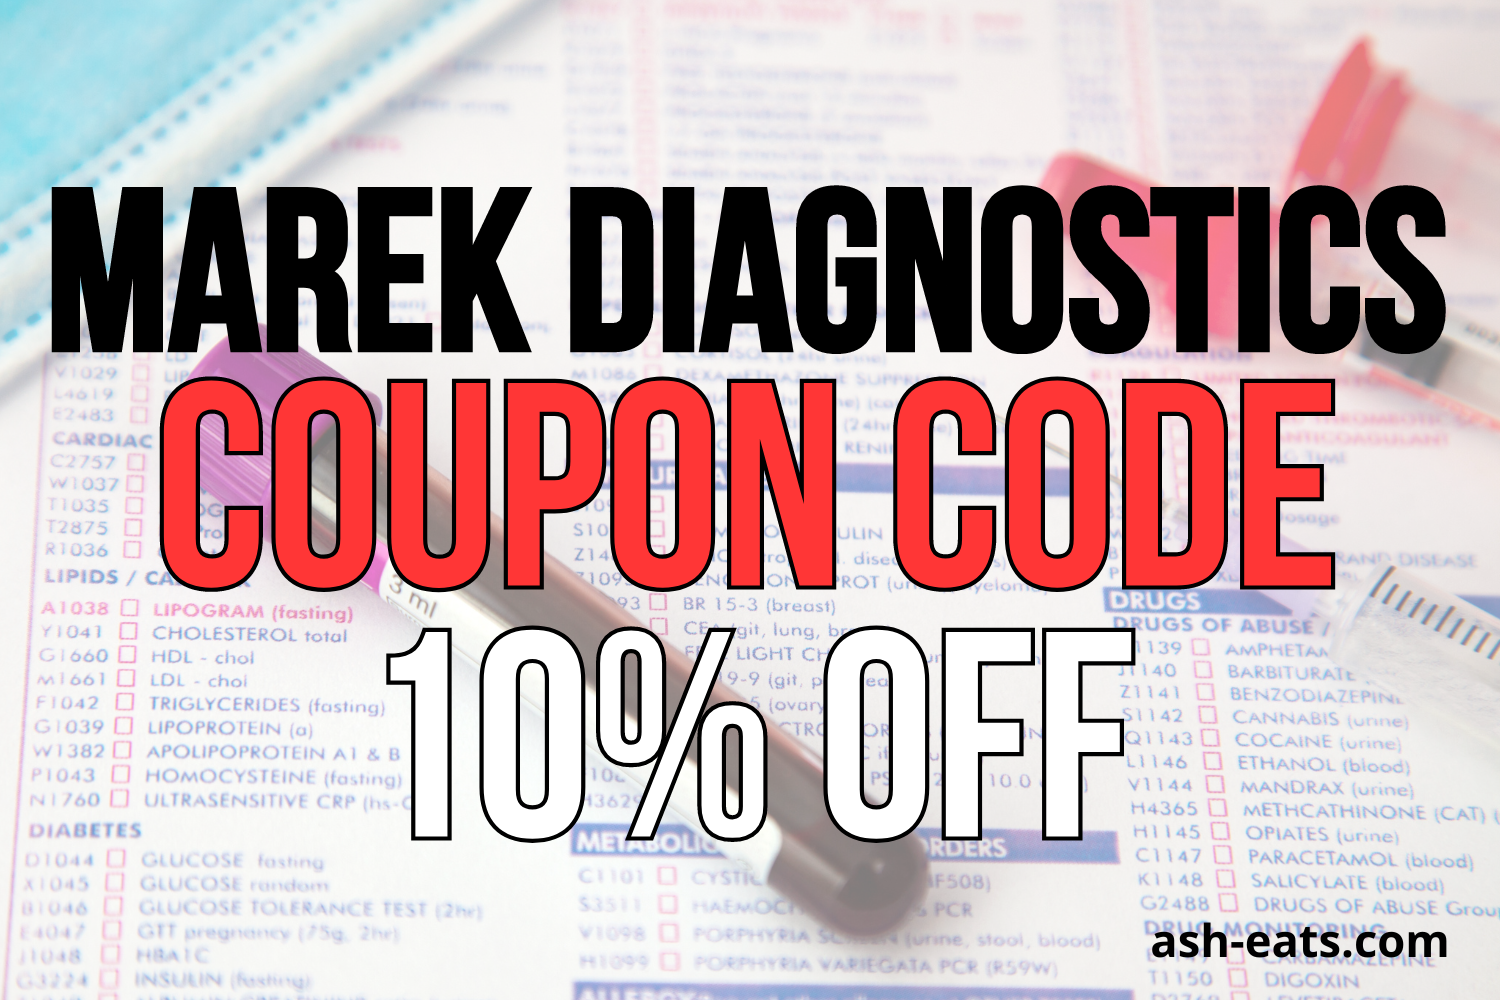 marek diagnostics coupon code